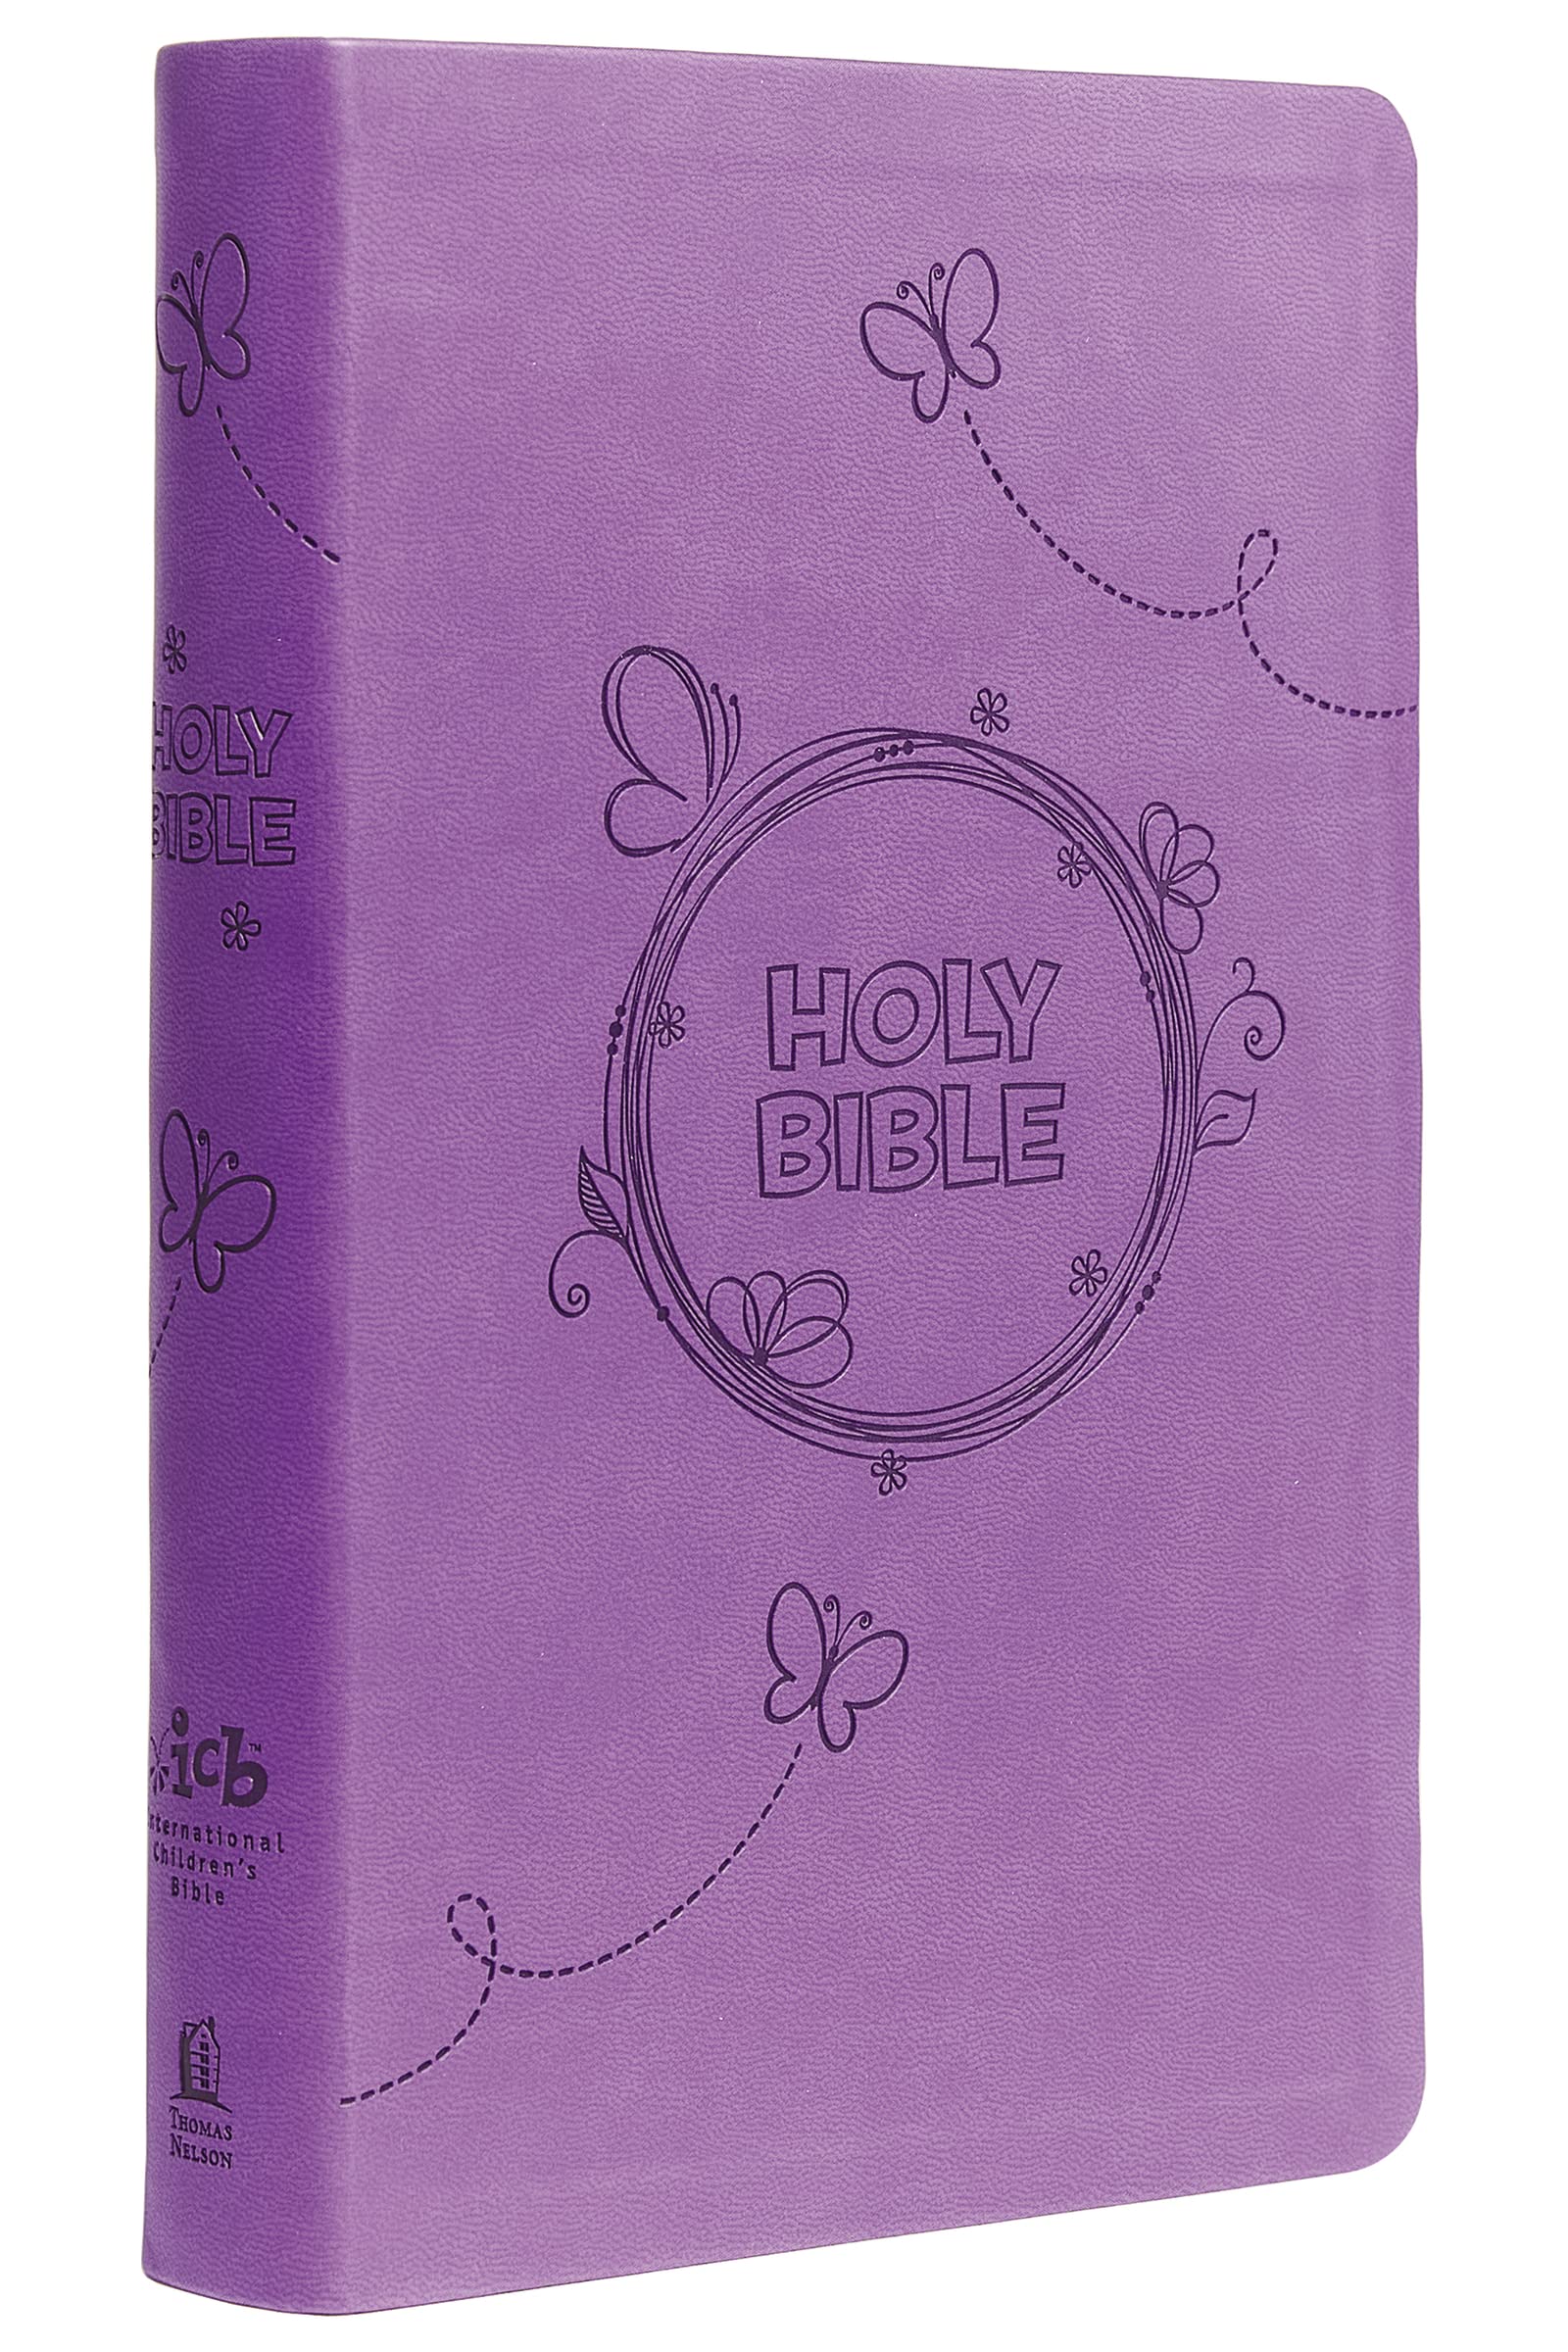 Icb, Holy Bible, Leathersoft, Purple: International Childrens Bible (Imitation Leather)